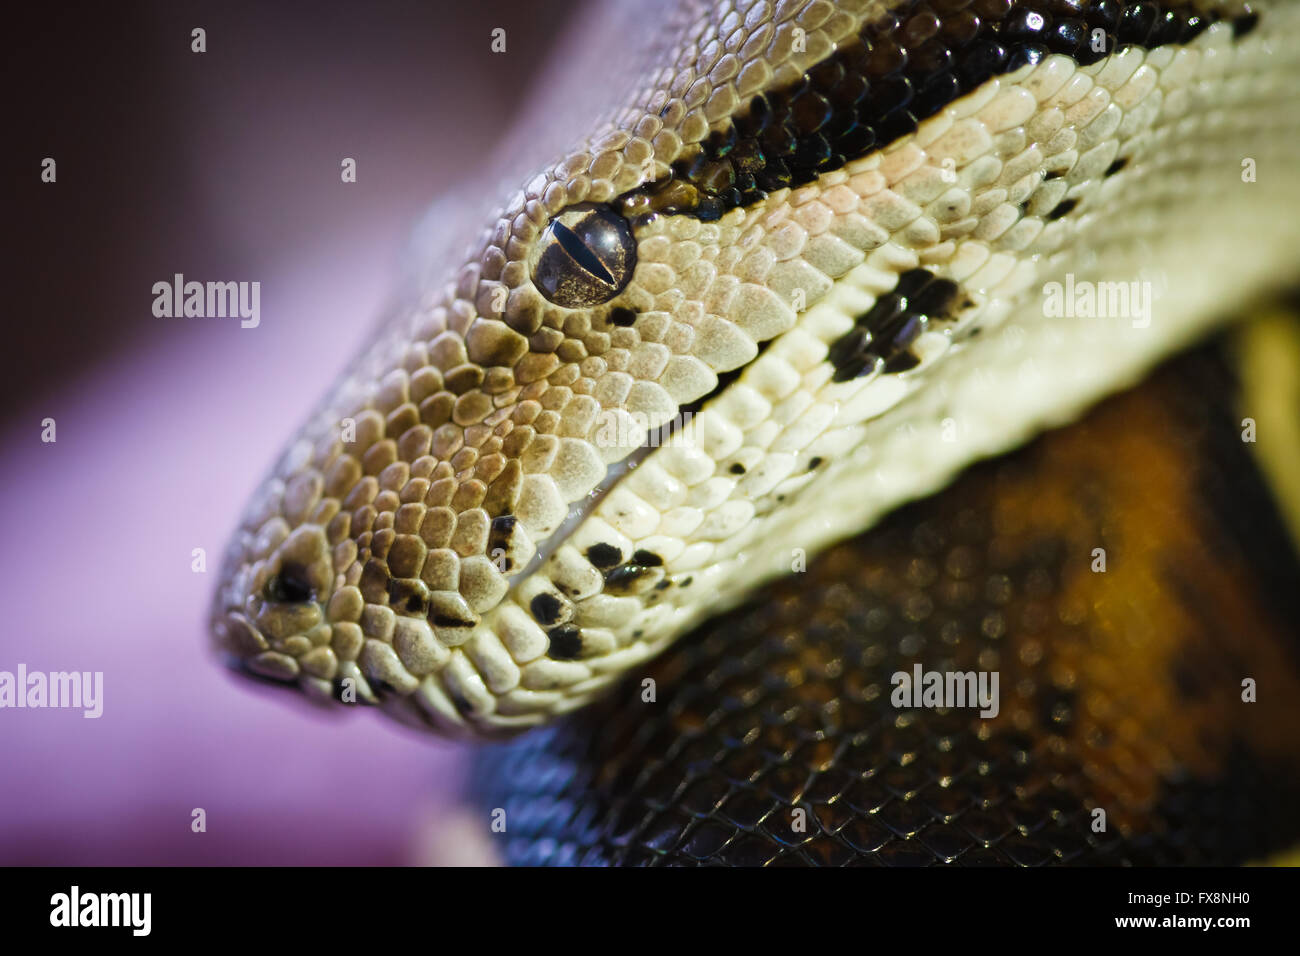 Premium Photo  Closeup of a black and white boa constrictor